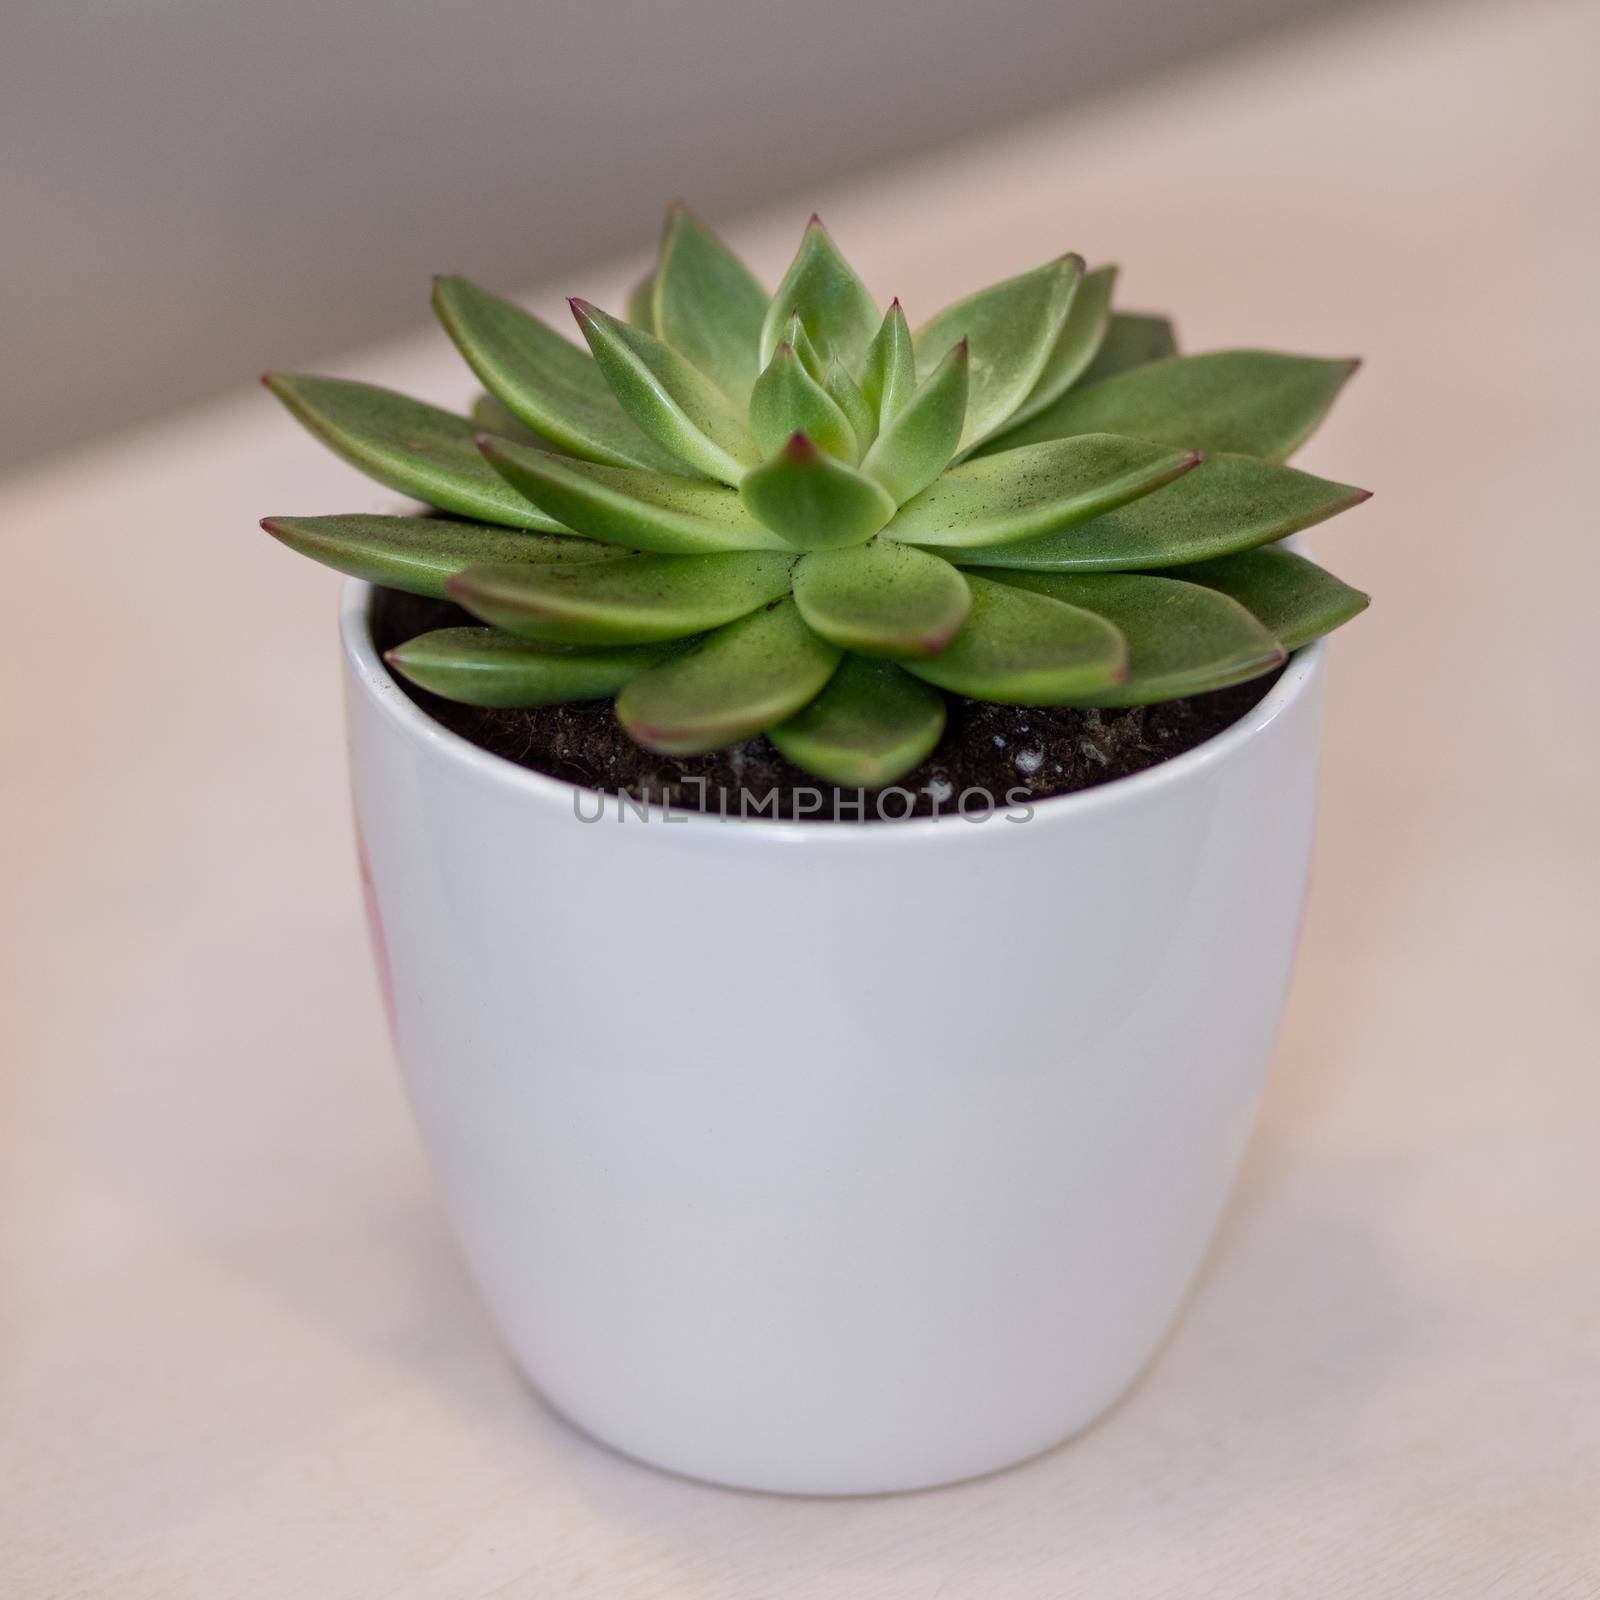 Succulent in the white pot